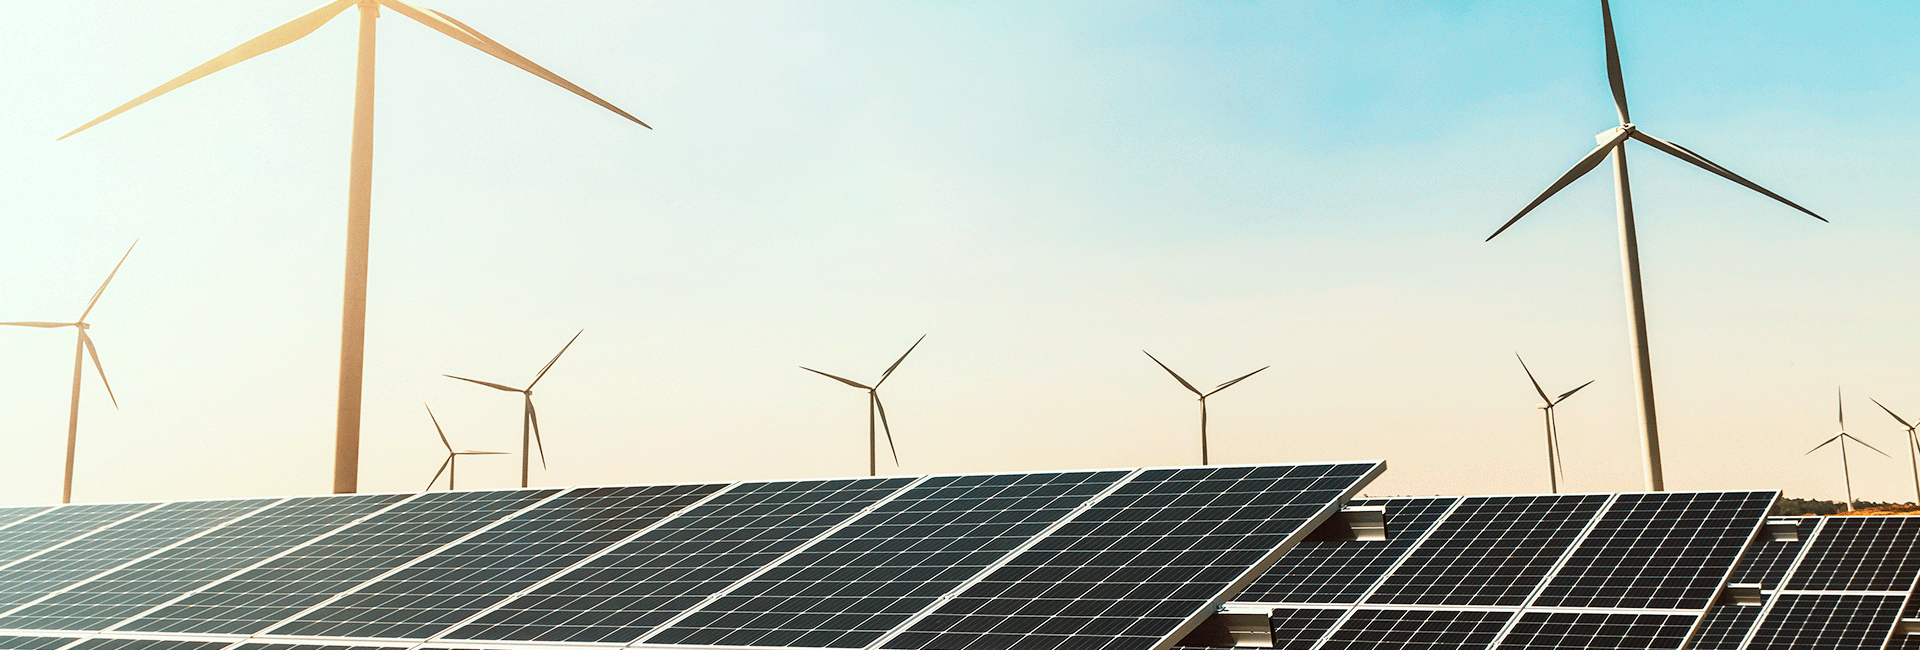 Renewable energies and decarbonization